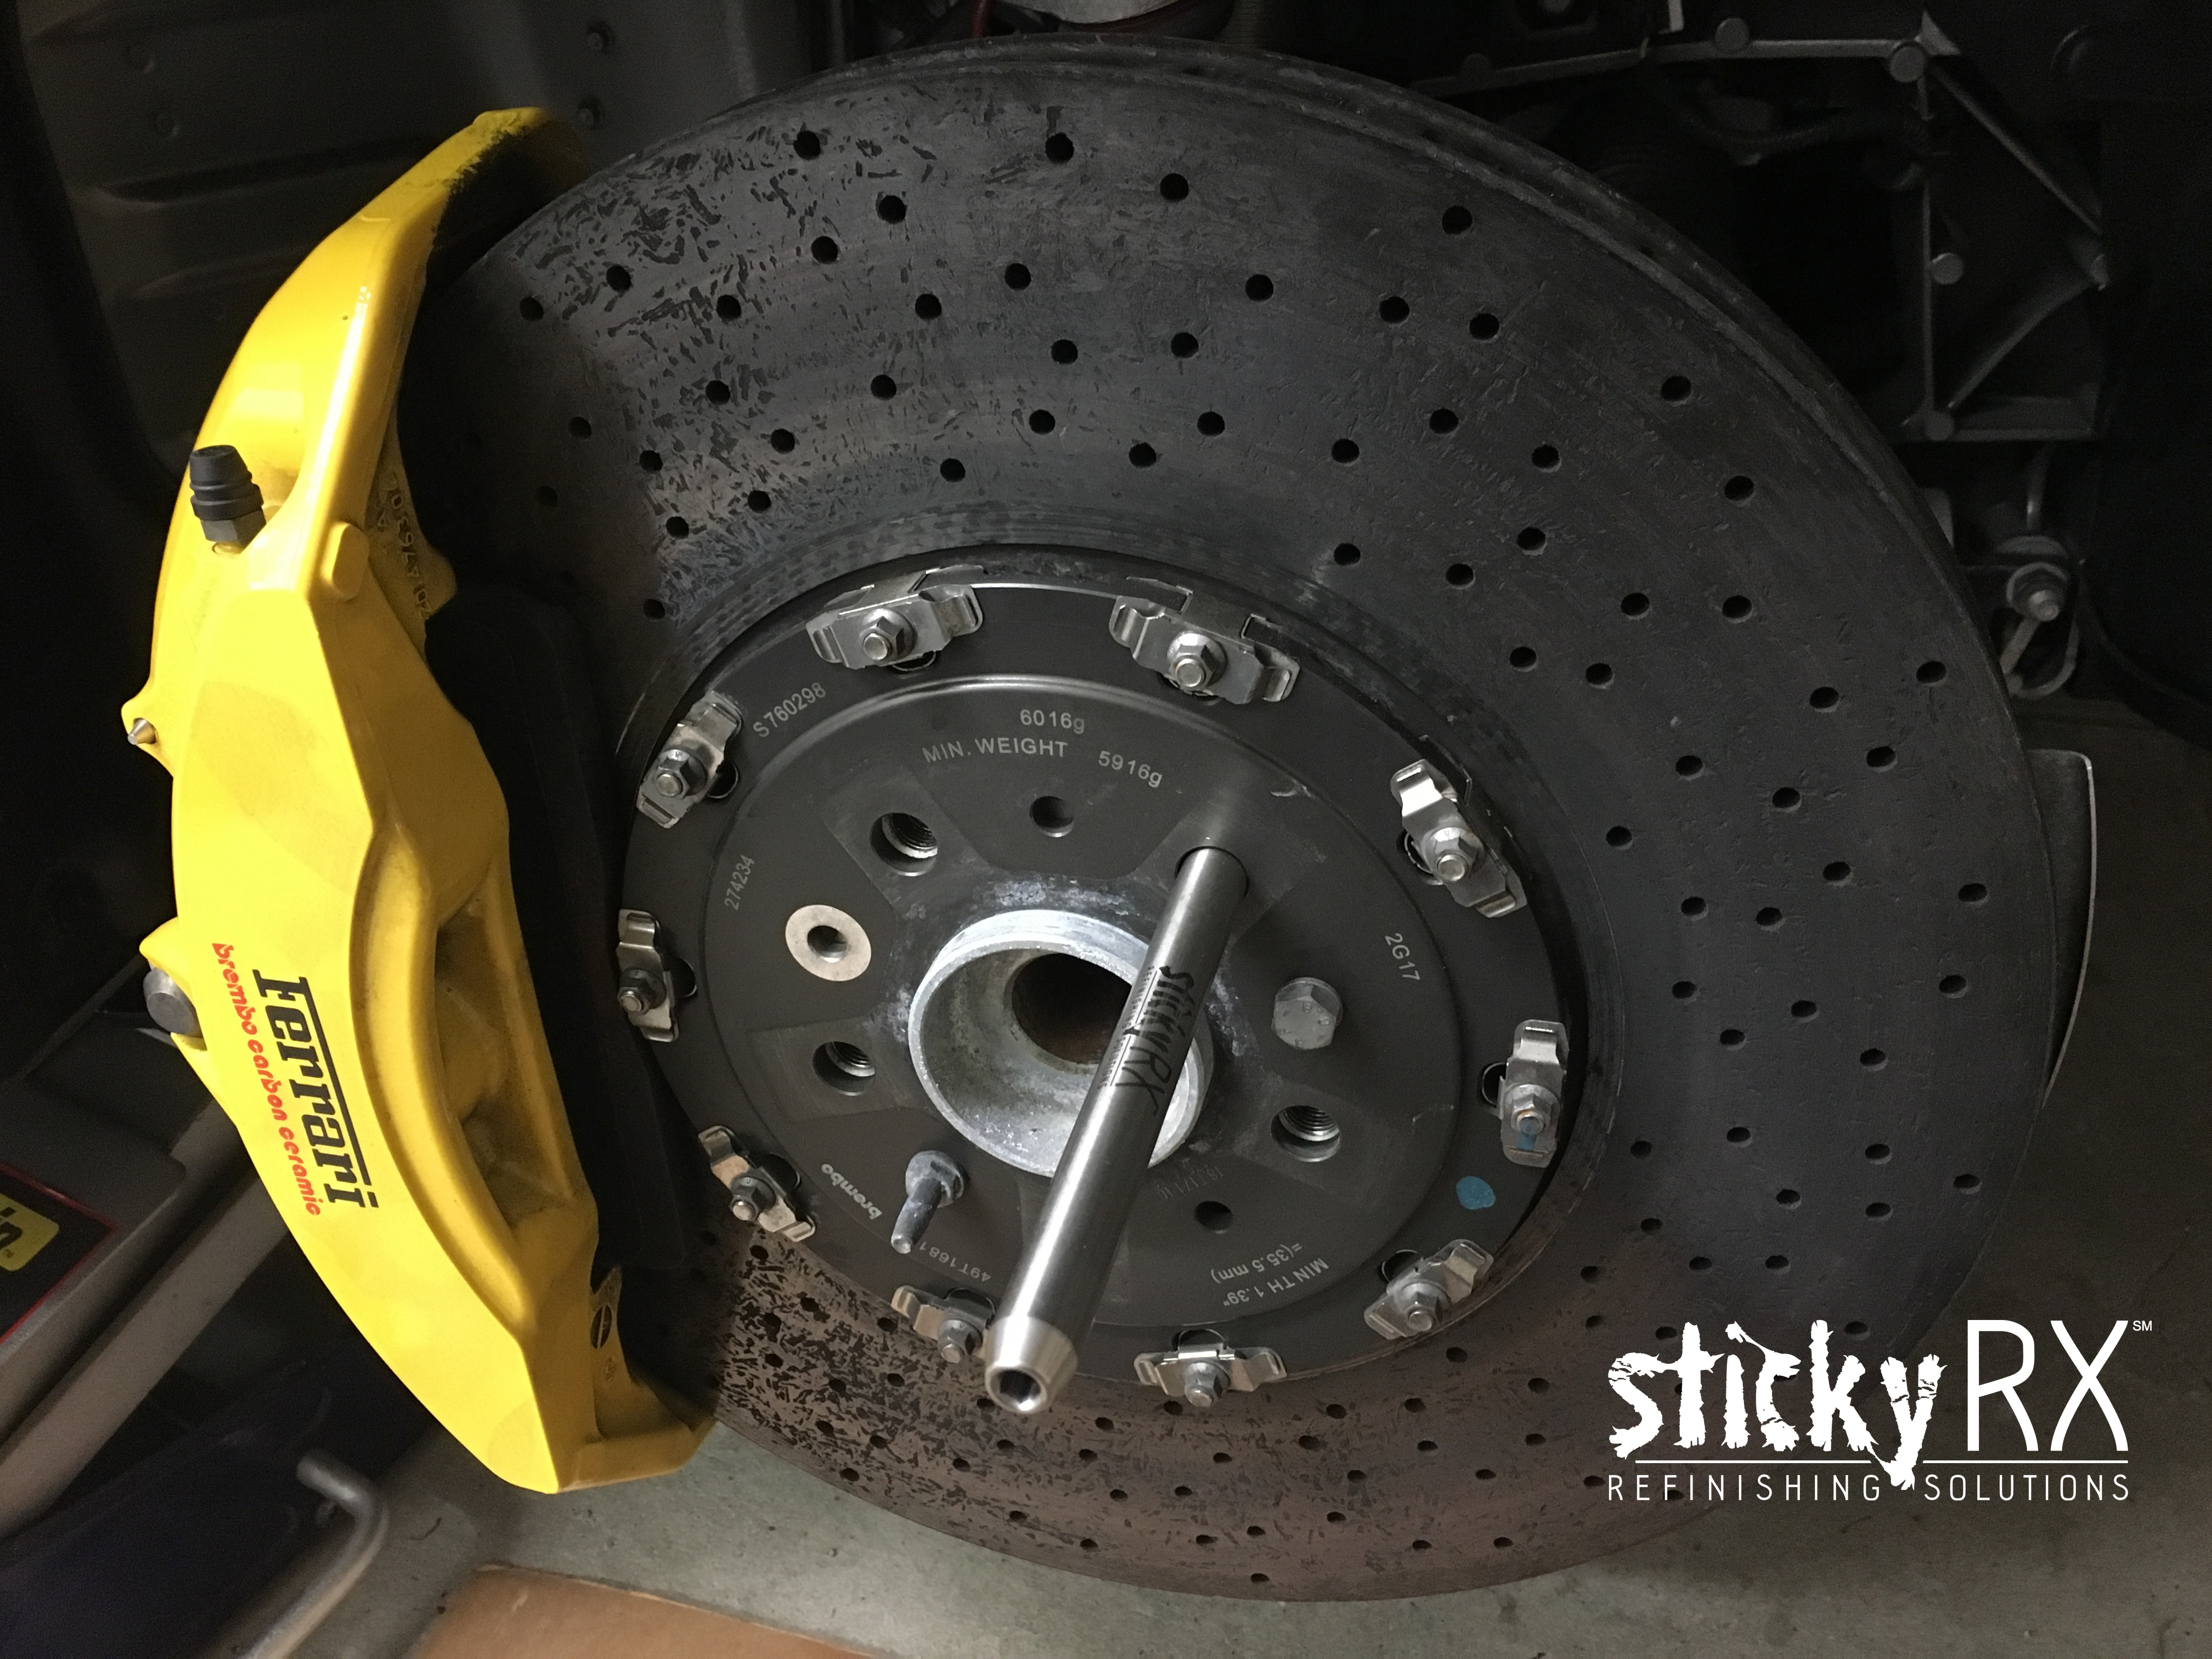 Sticky RX Refinishing Solutions Ferrari Wheel Mounting Tool 06